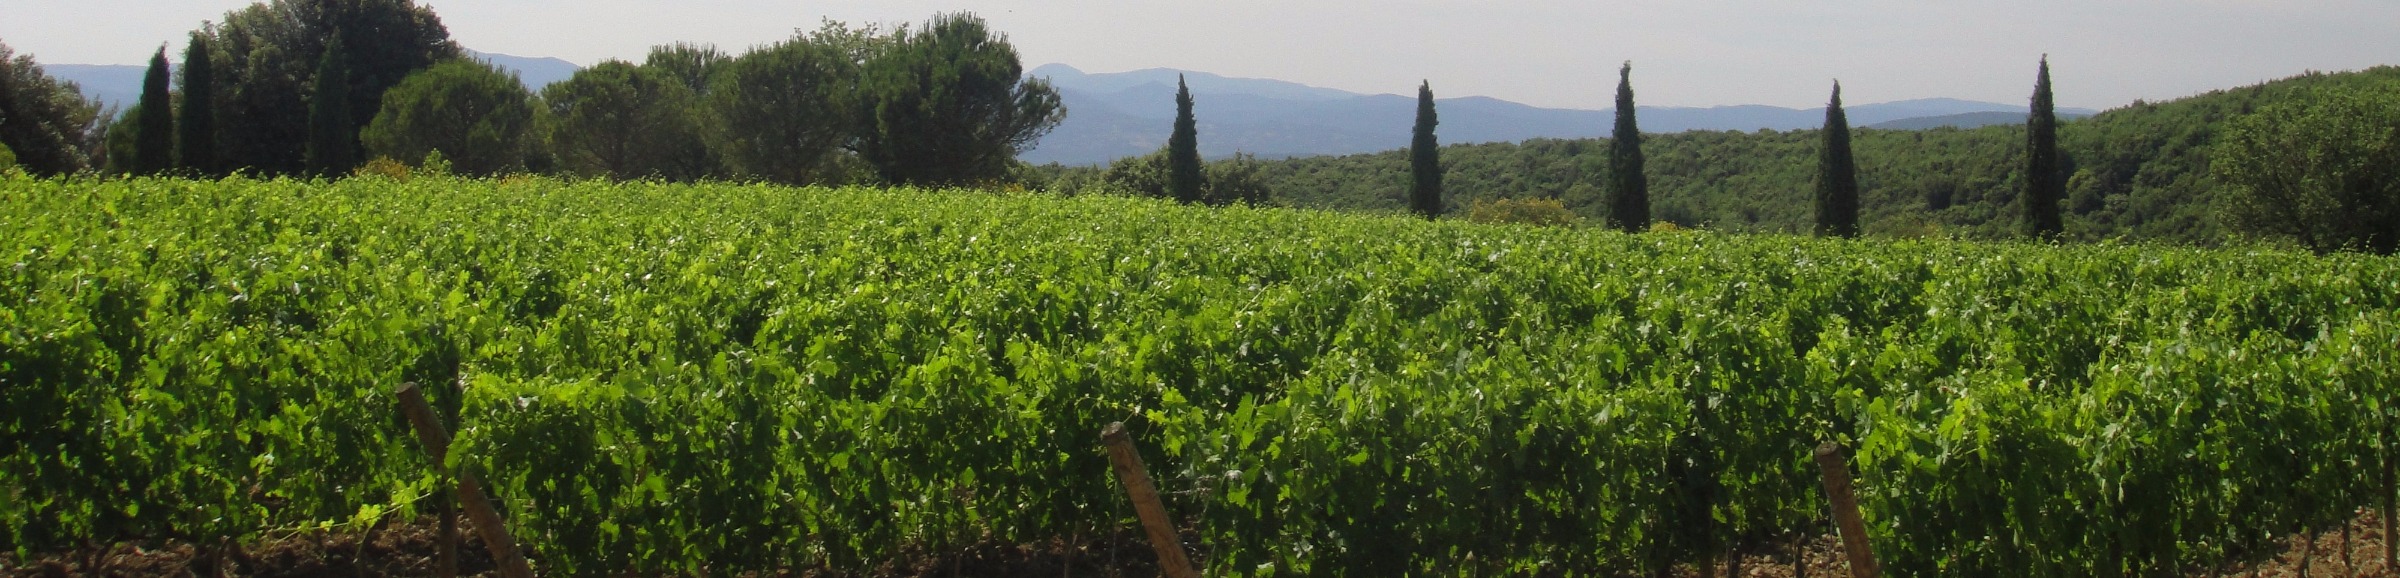 Toscana vin